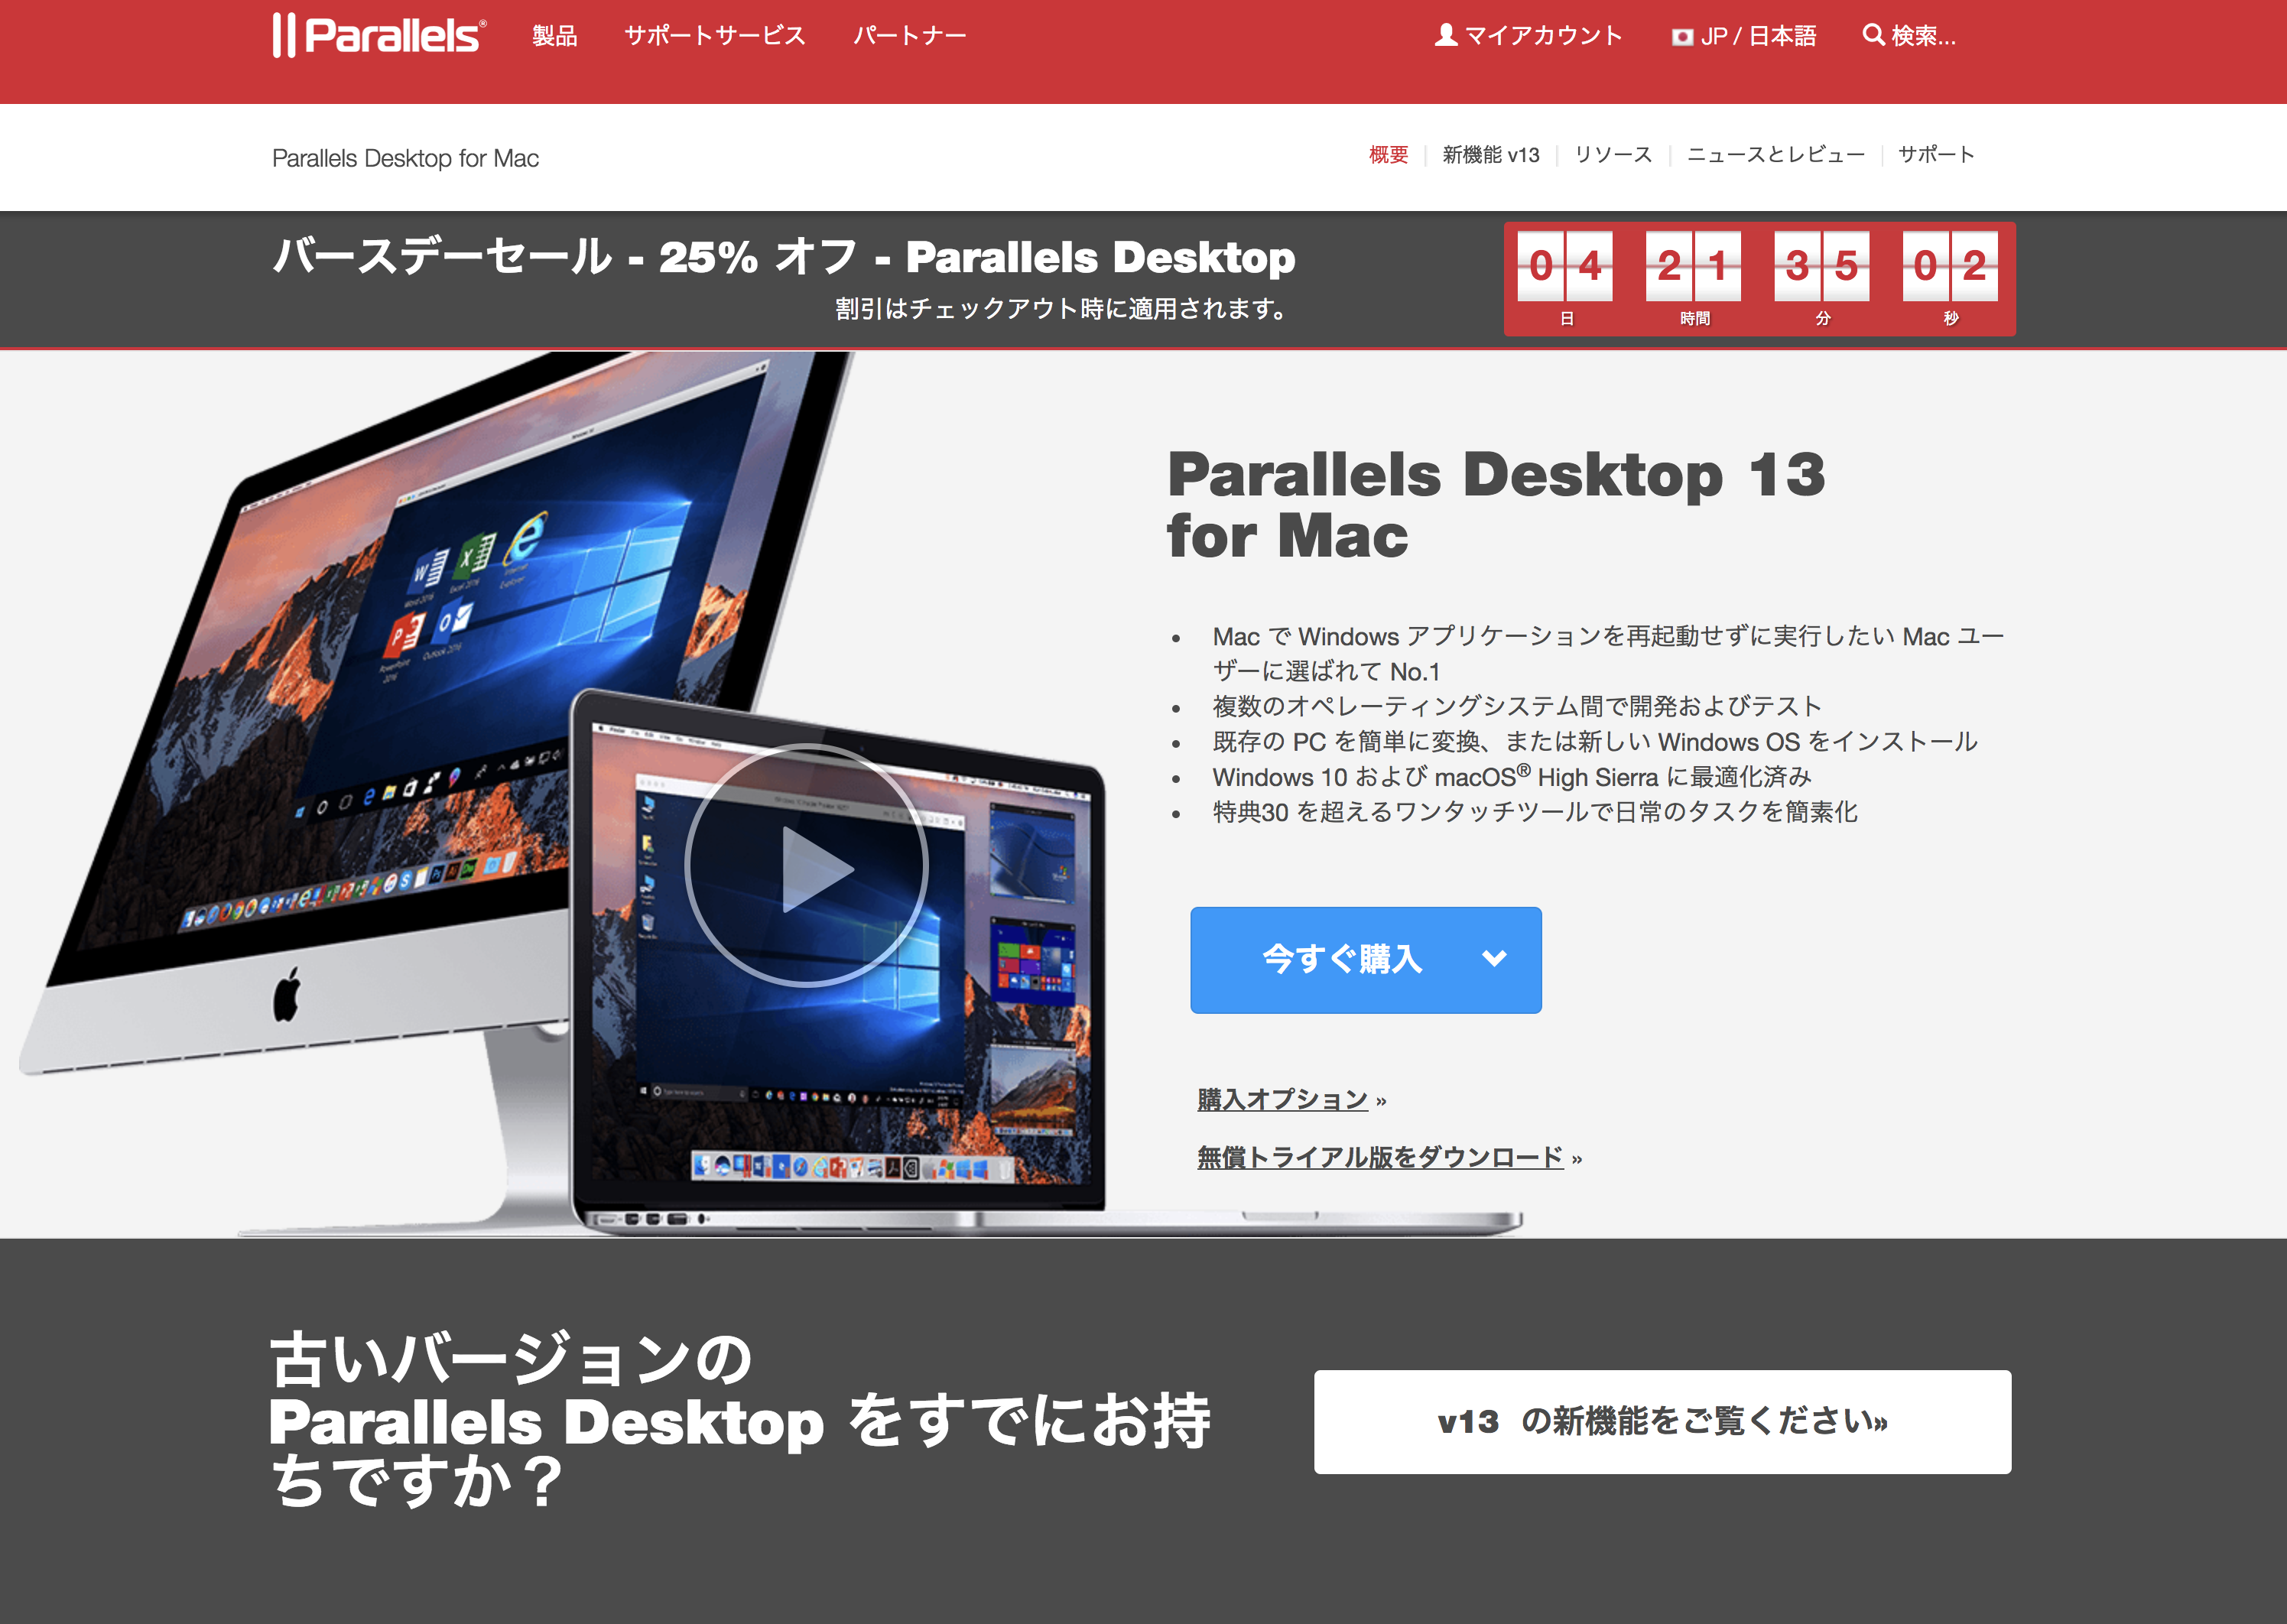 Parallels Desktop for Mac 13 キャンペーン